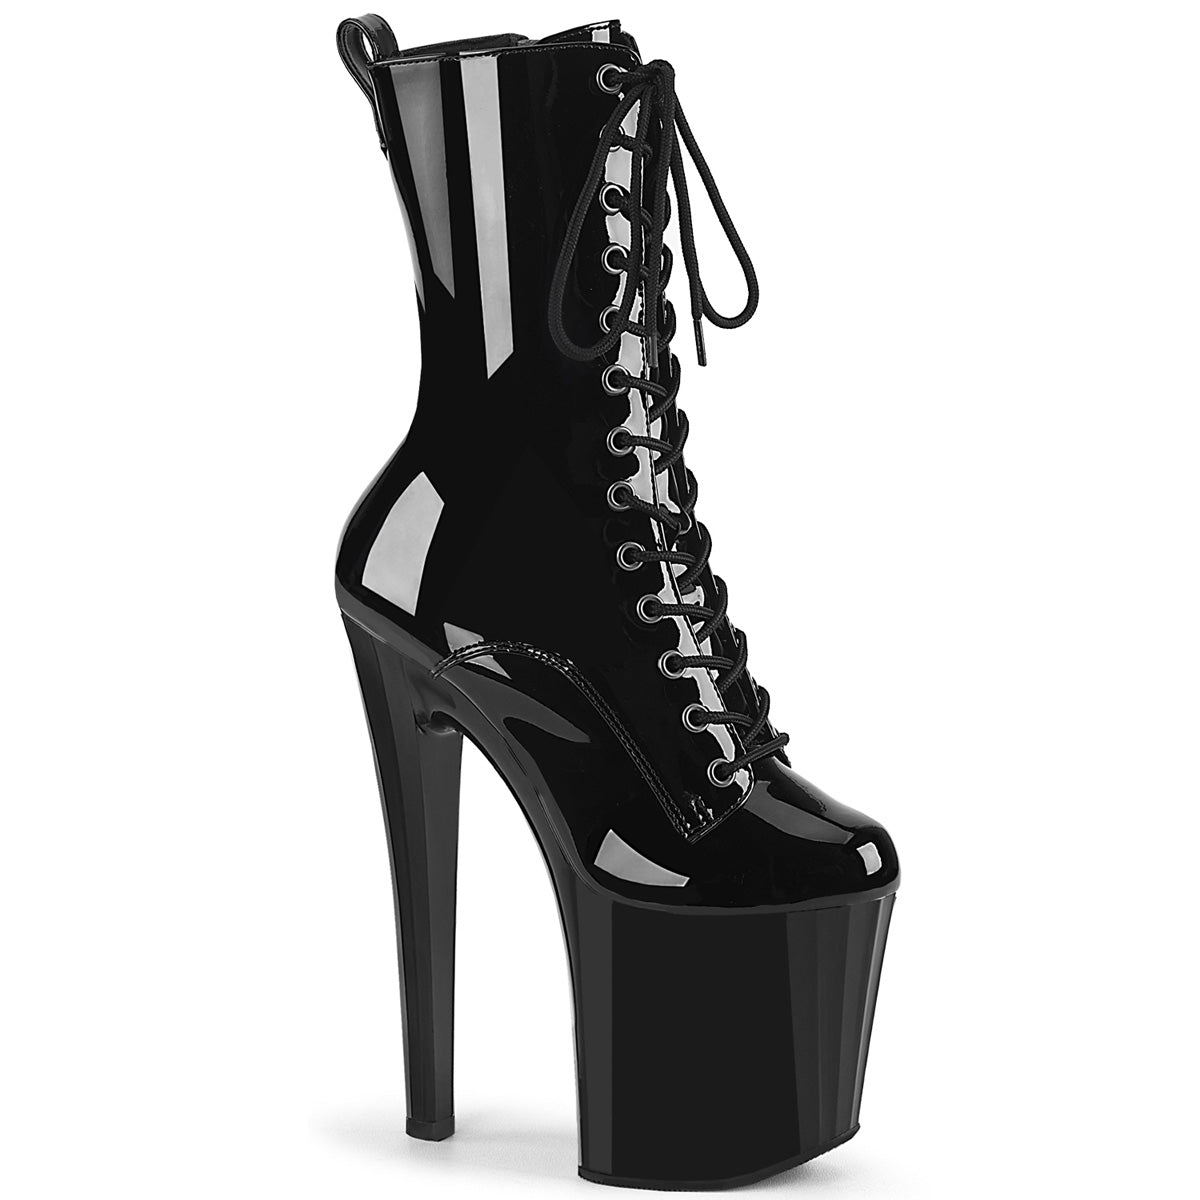 ENCHANT-1040 Pleaser Black Patent Platform Shoes [Kinky Boots]